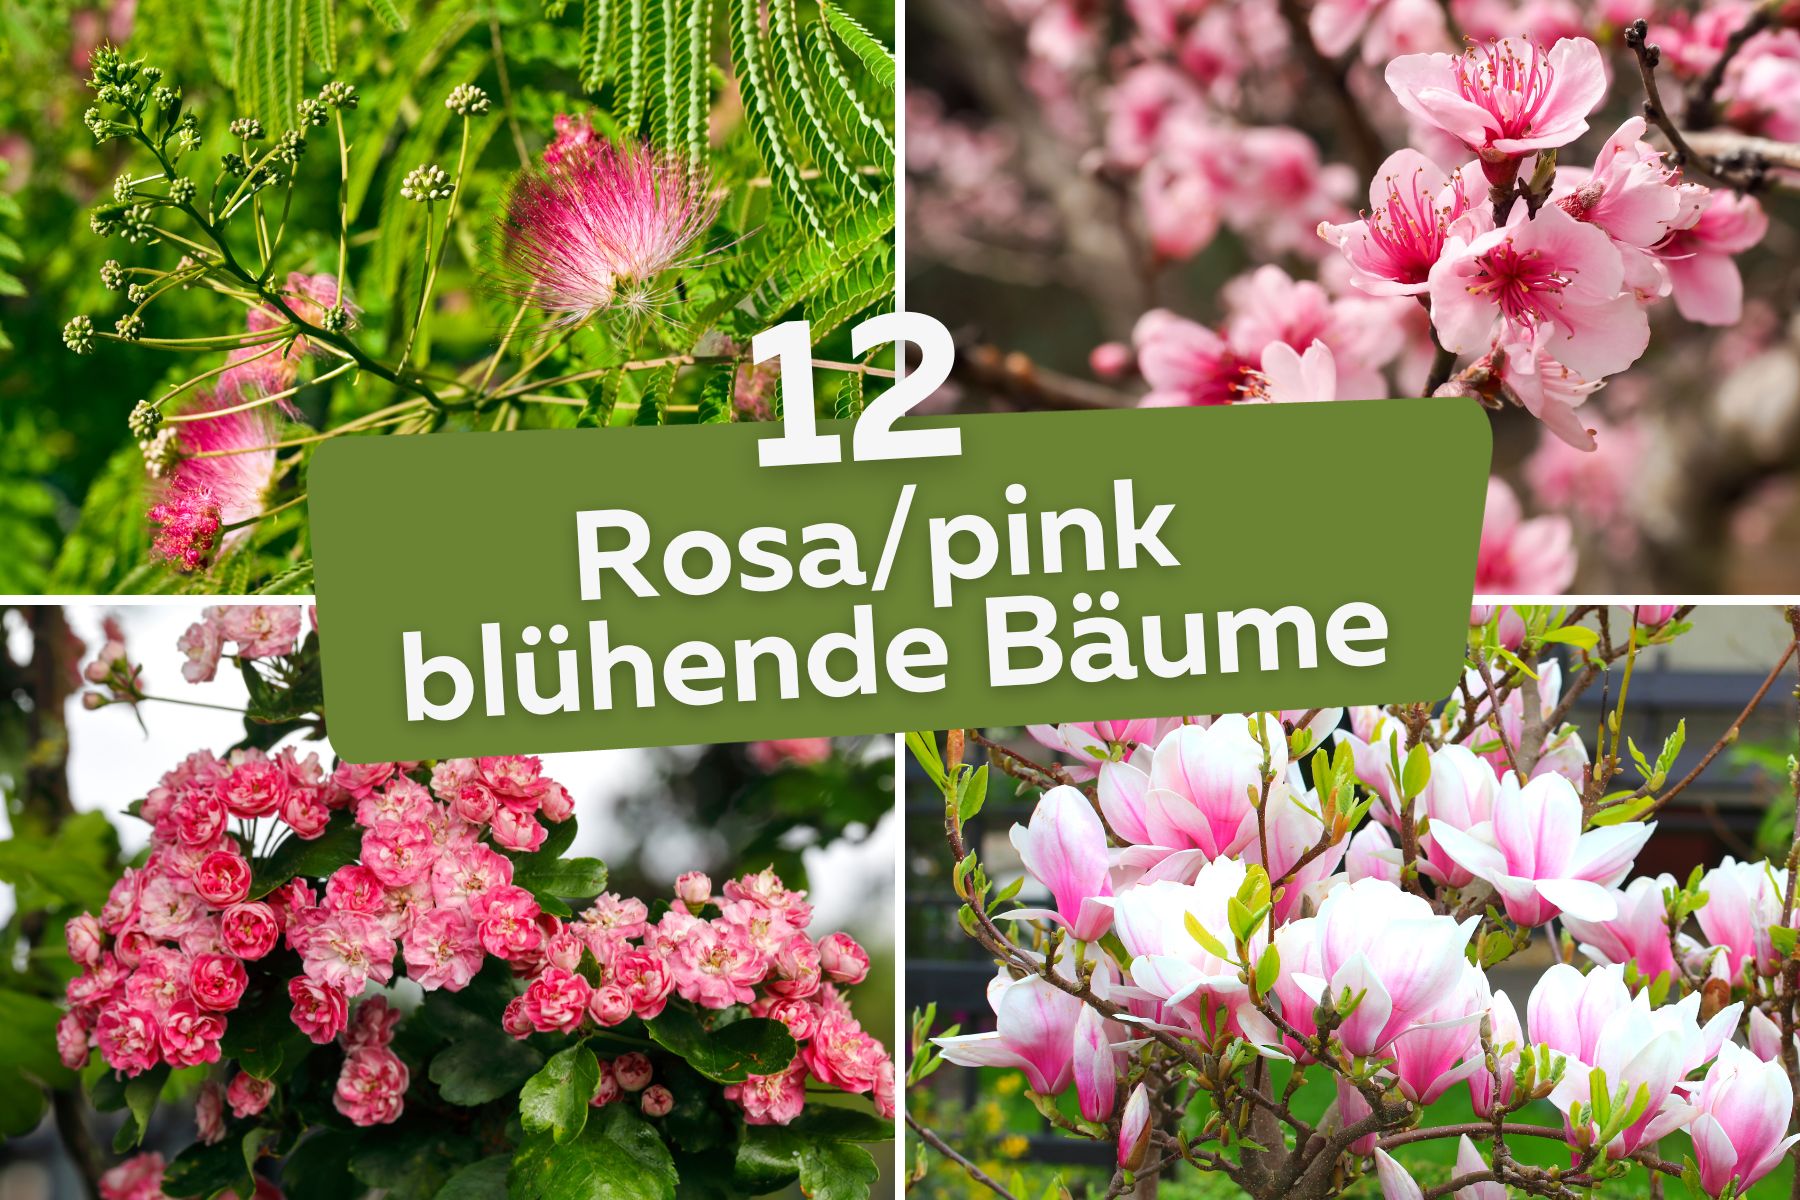 12 árboles con flores rosa/rosa